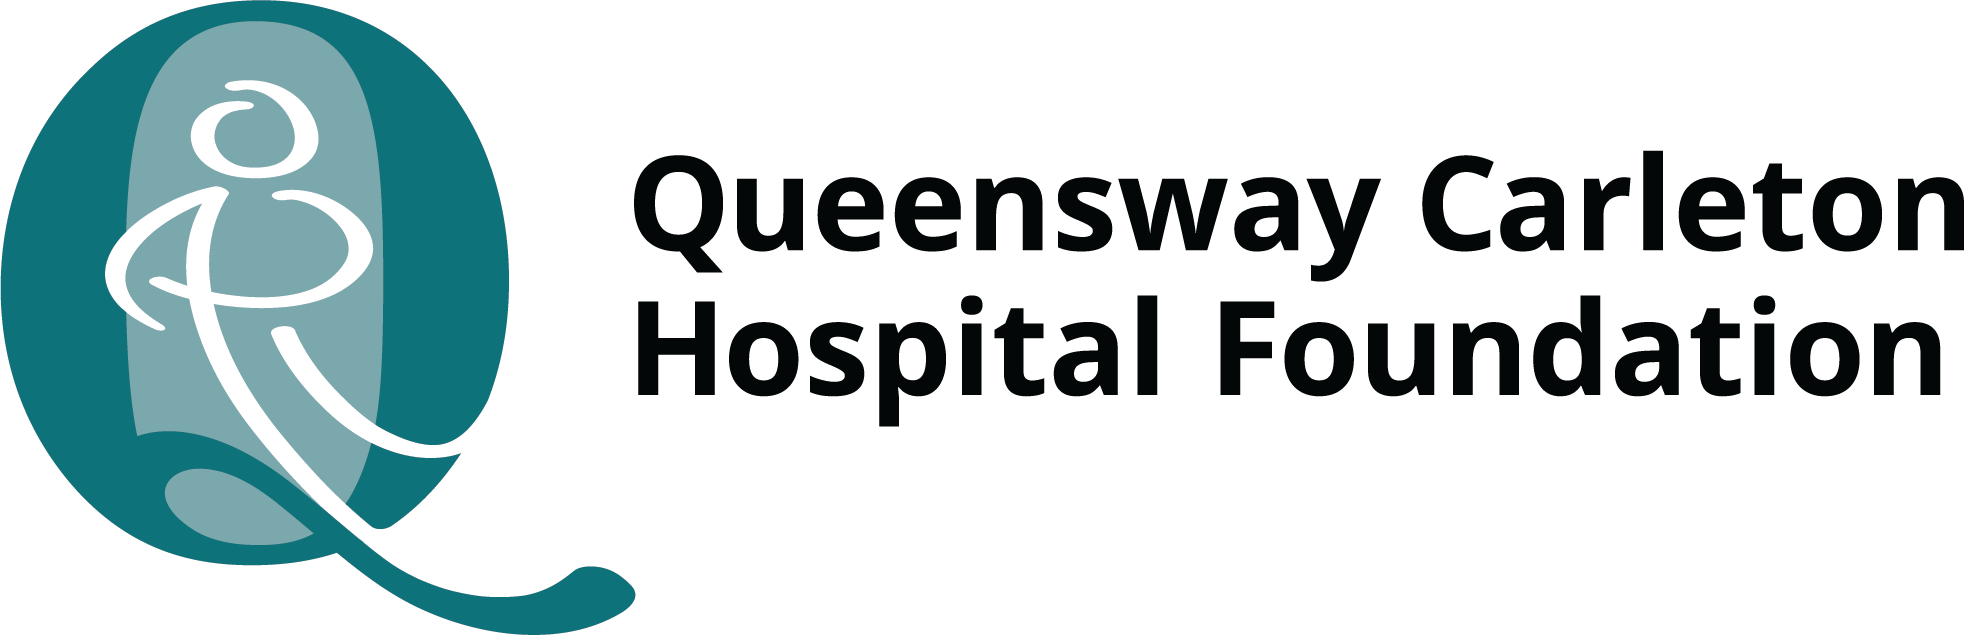 Queensway Carleton Hospital Foundation